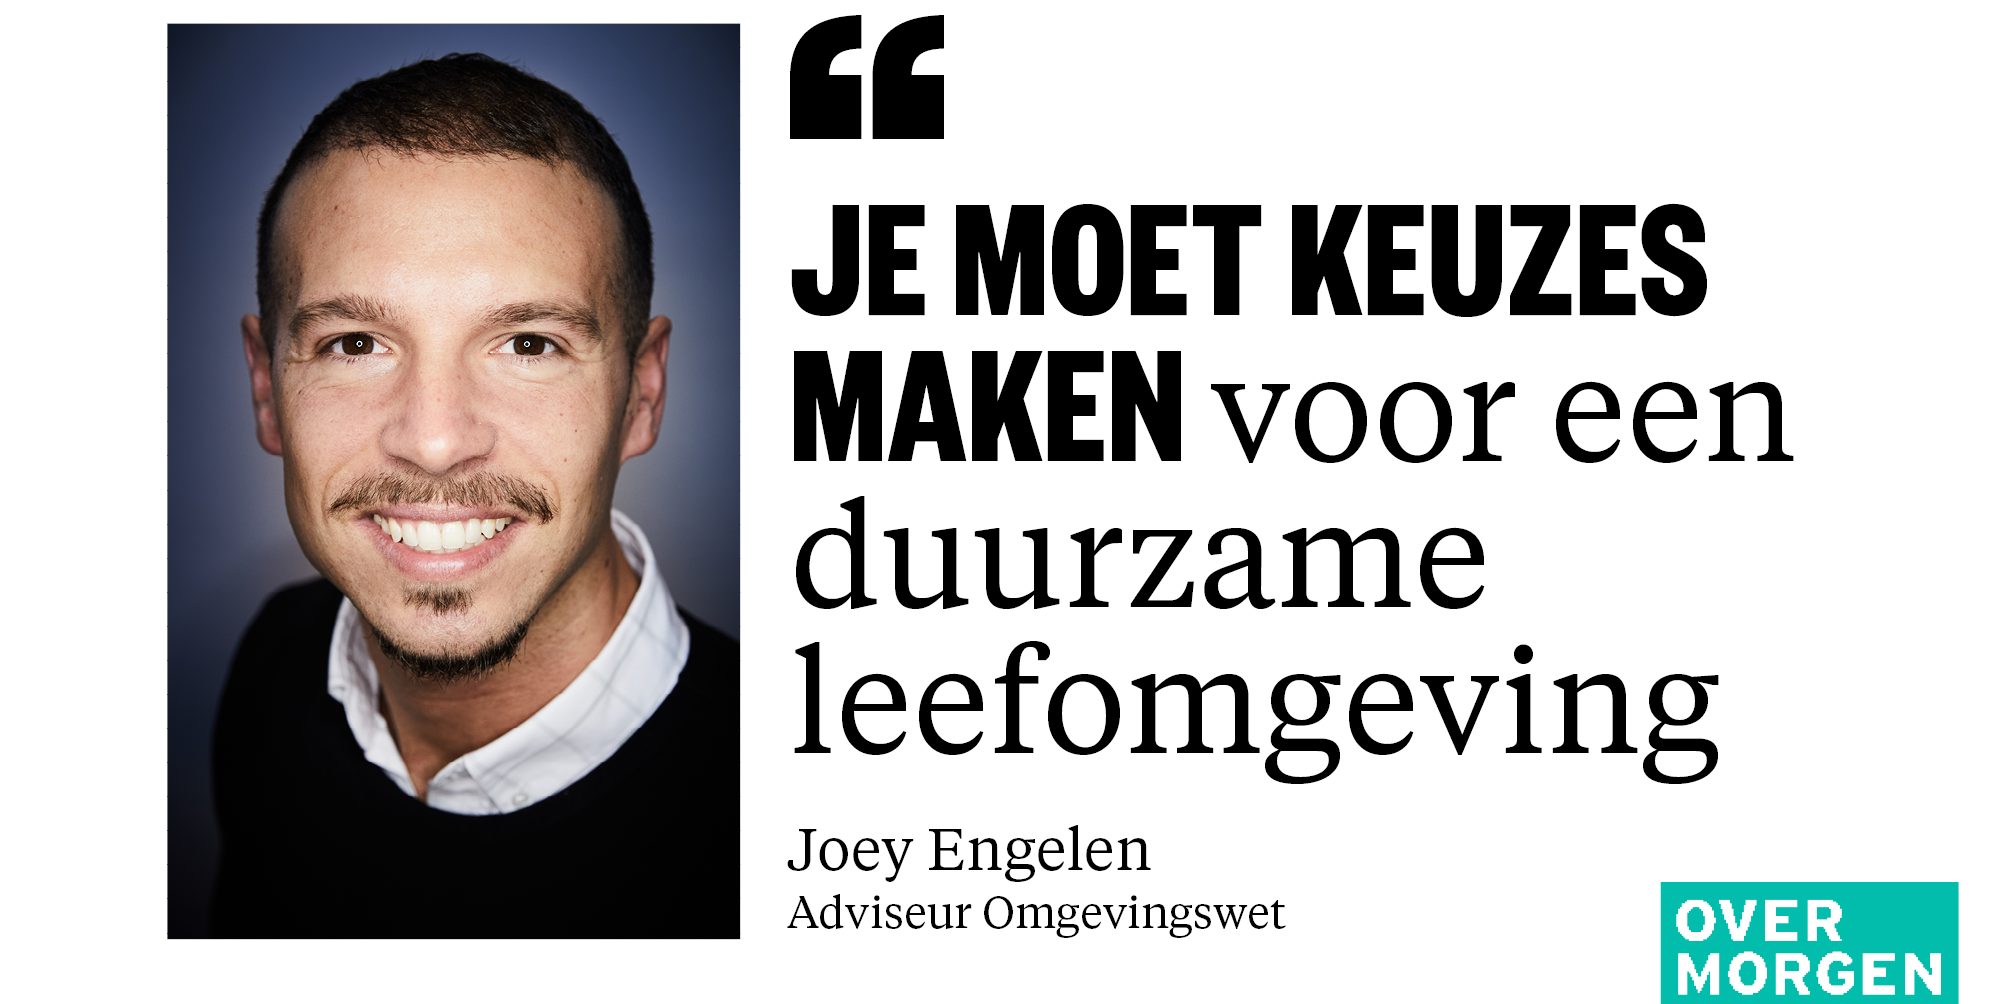 Joey Engelen